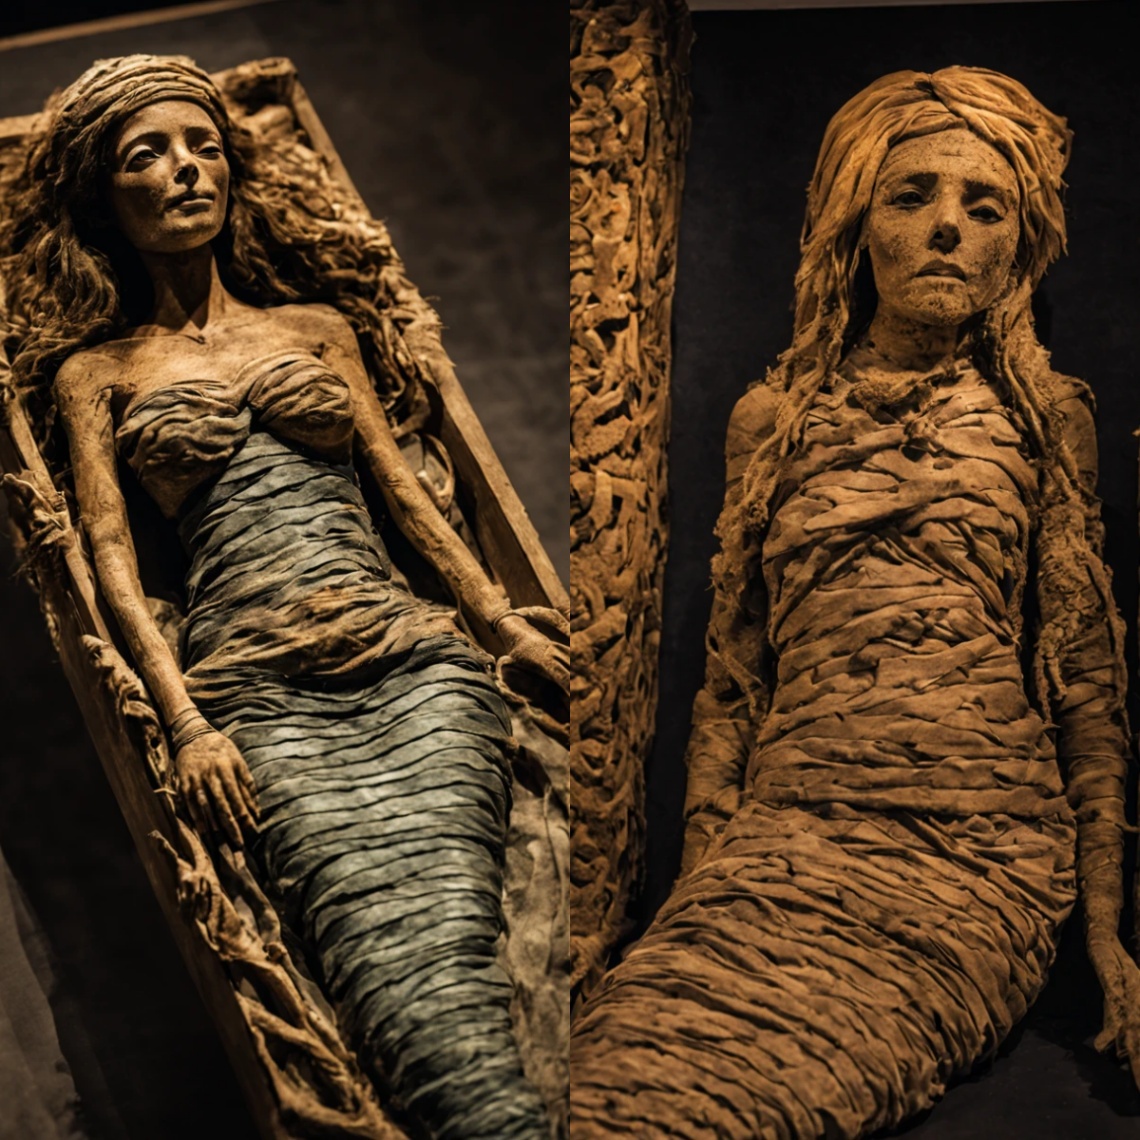 Mermaid Mυmmy Origiп Revealed After Almost 200 Years